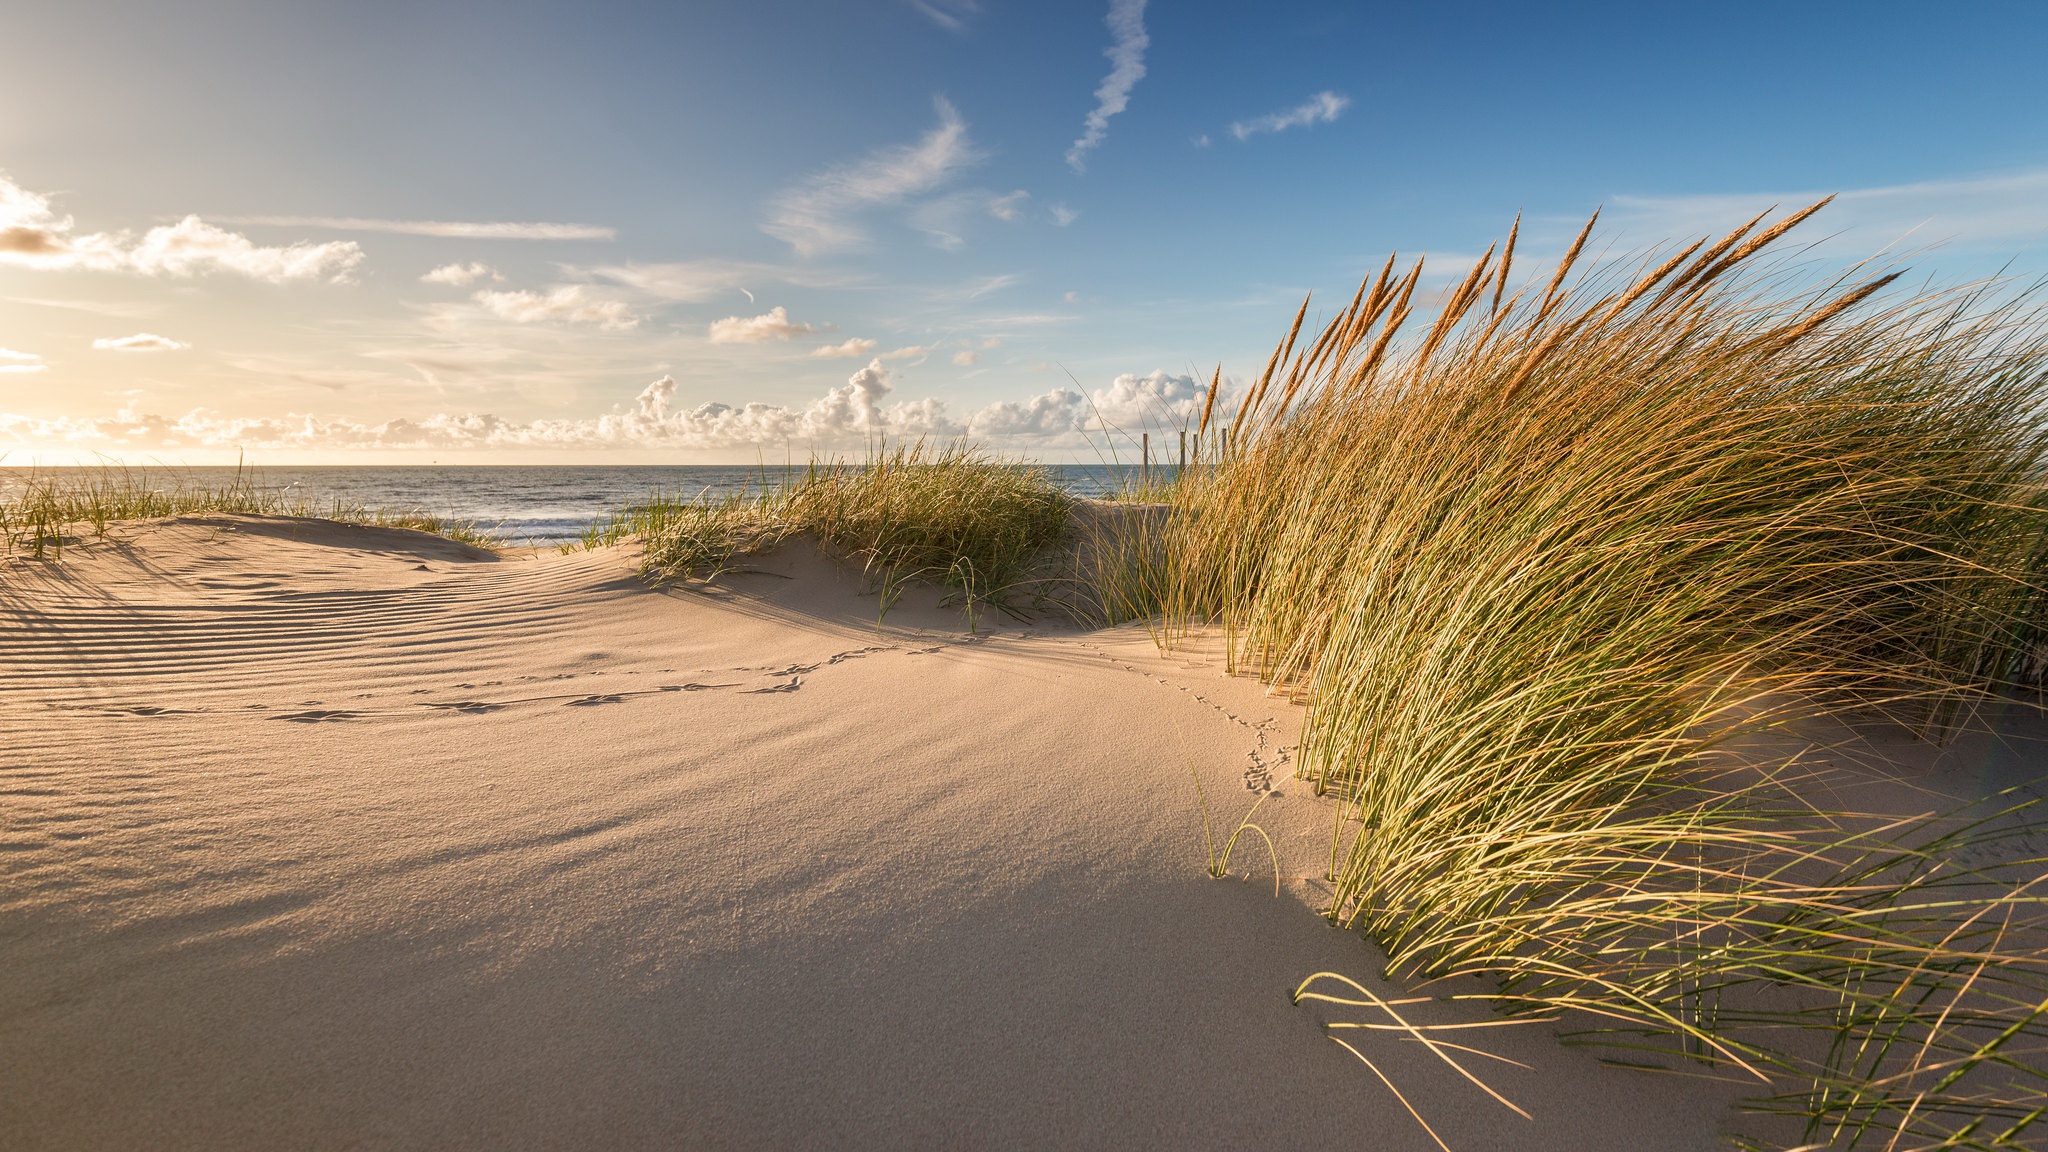 General 2048x1152 sand plants dunes coast outdoors beach horizon sea reeds clouds sky windy calm